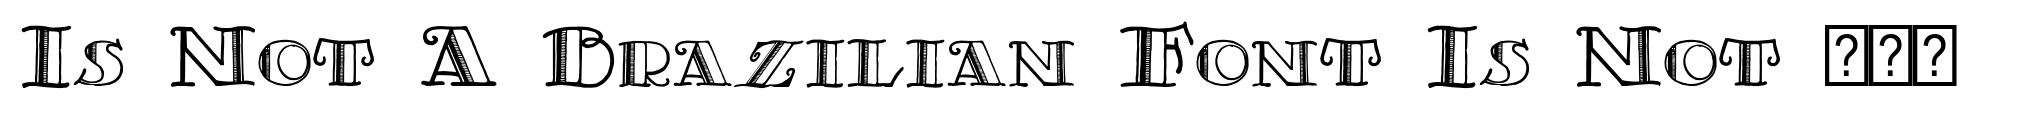 Is Not A Brazilian Font Is Not ABrazilian Font image